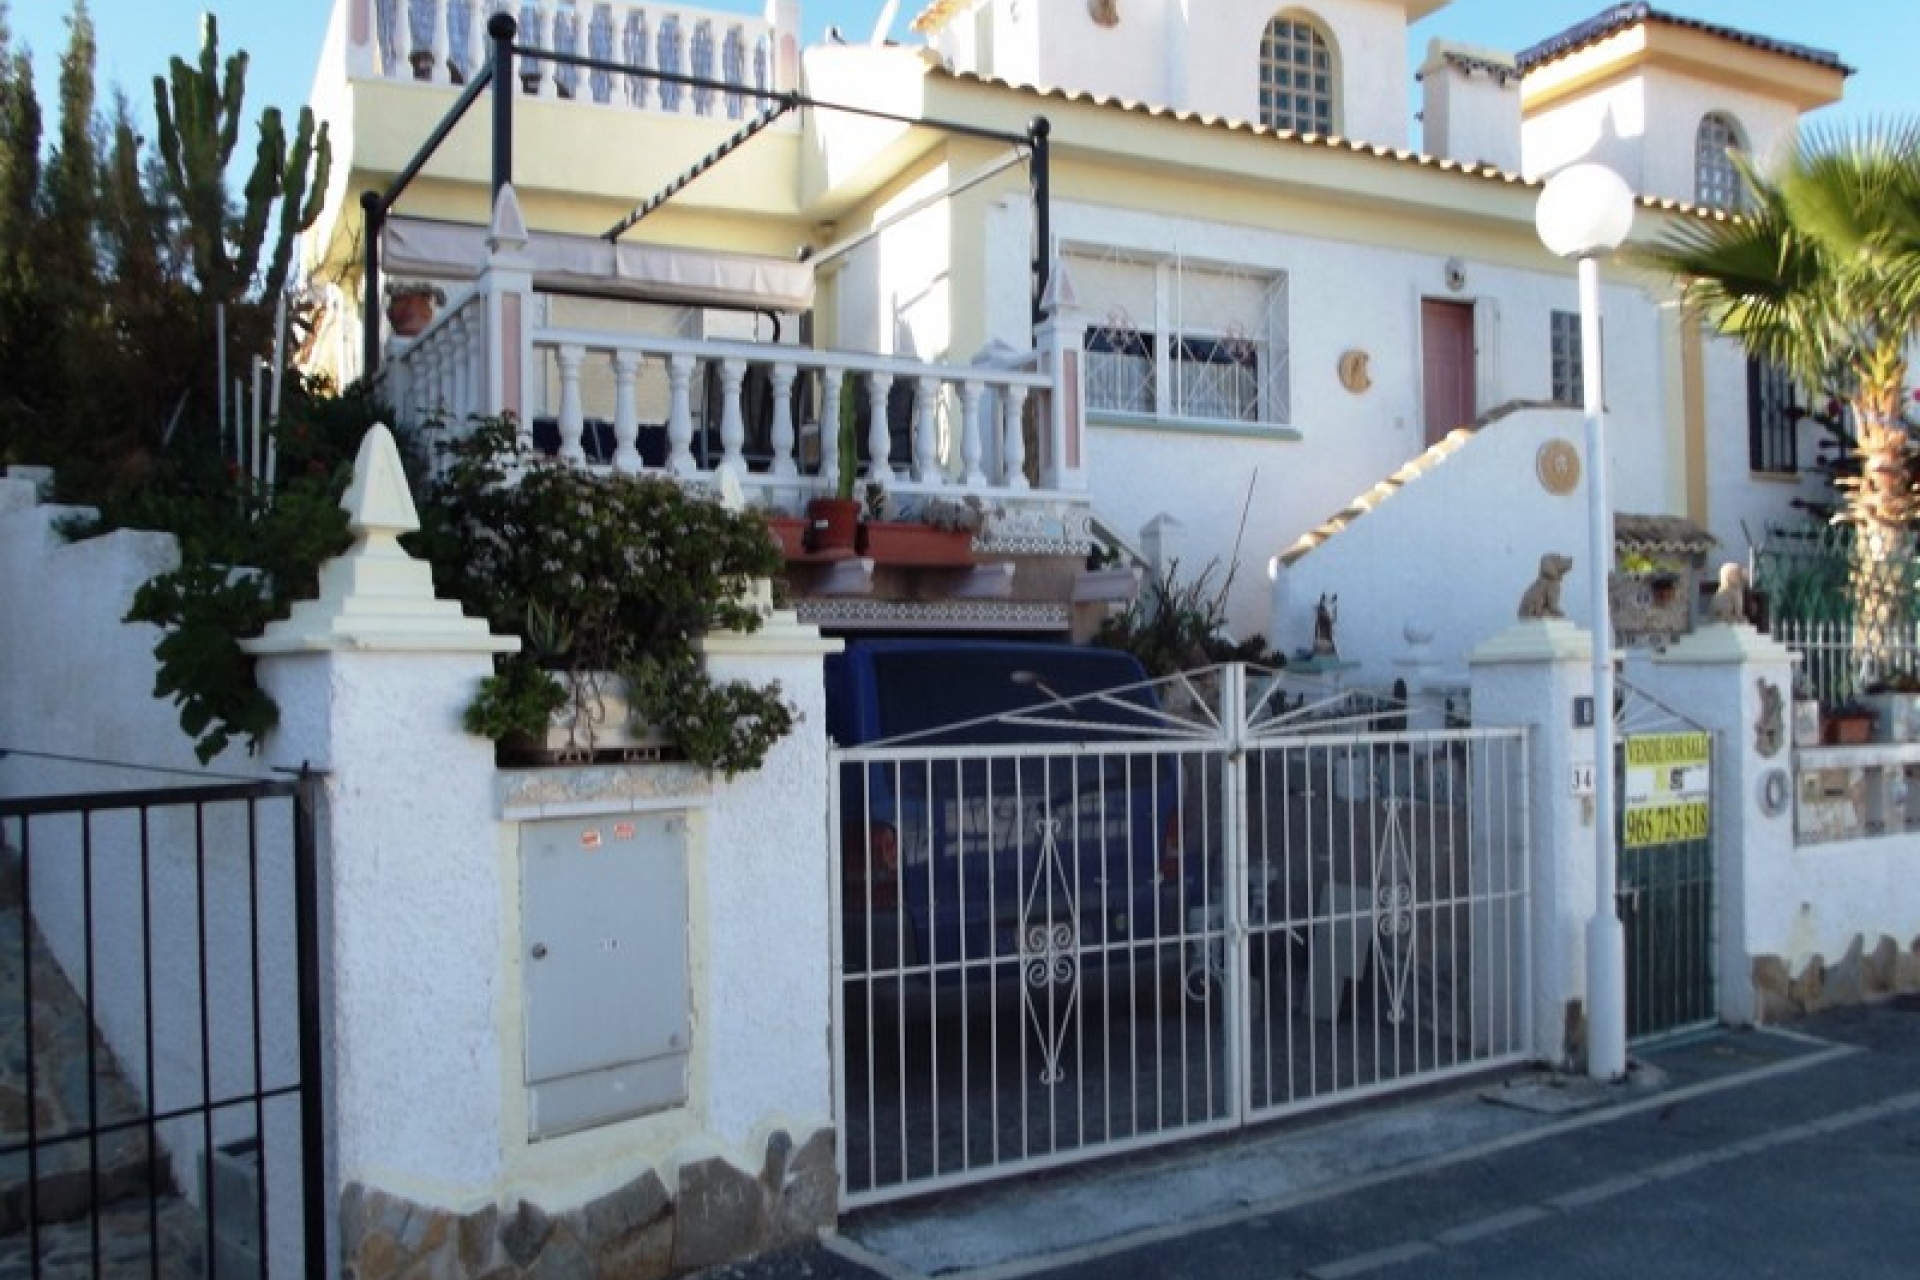 For sale, cheap, bargain property, La Marquesa, Ciudad Quesada on Spains Costa Blanca cheap property bargain.